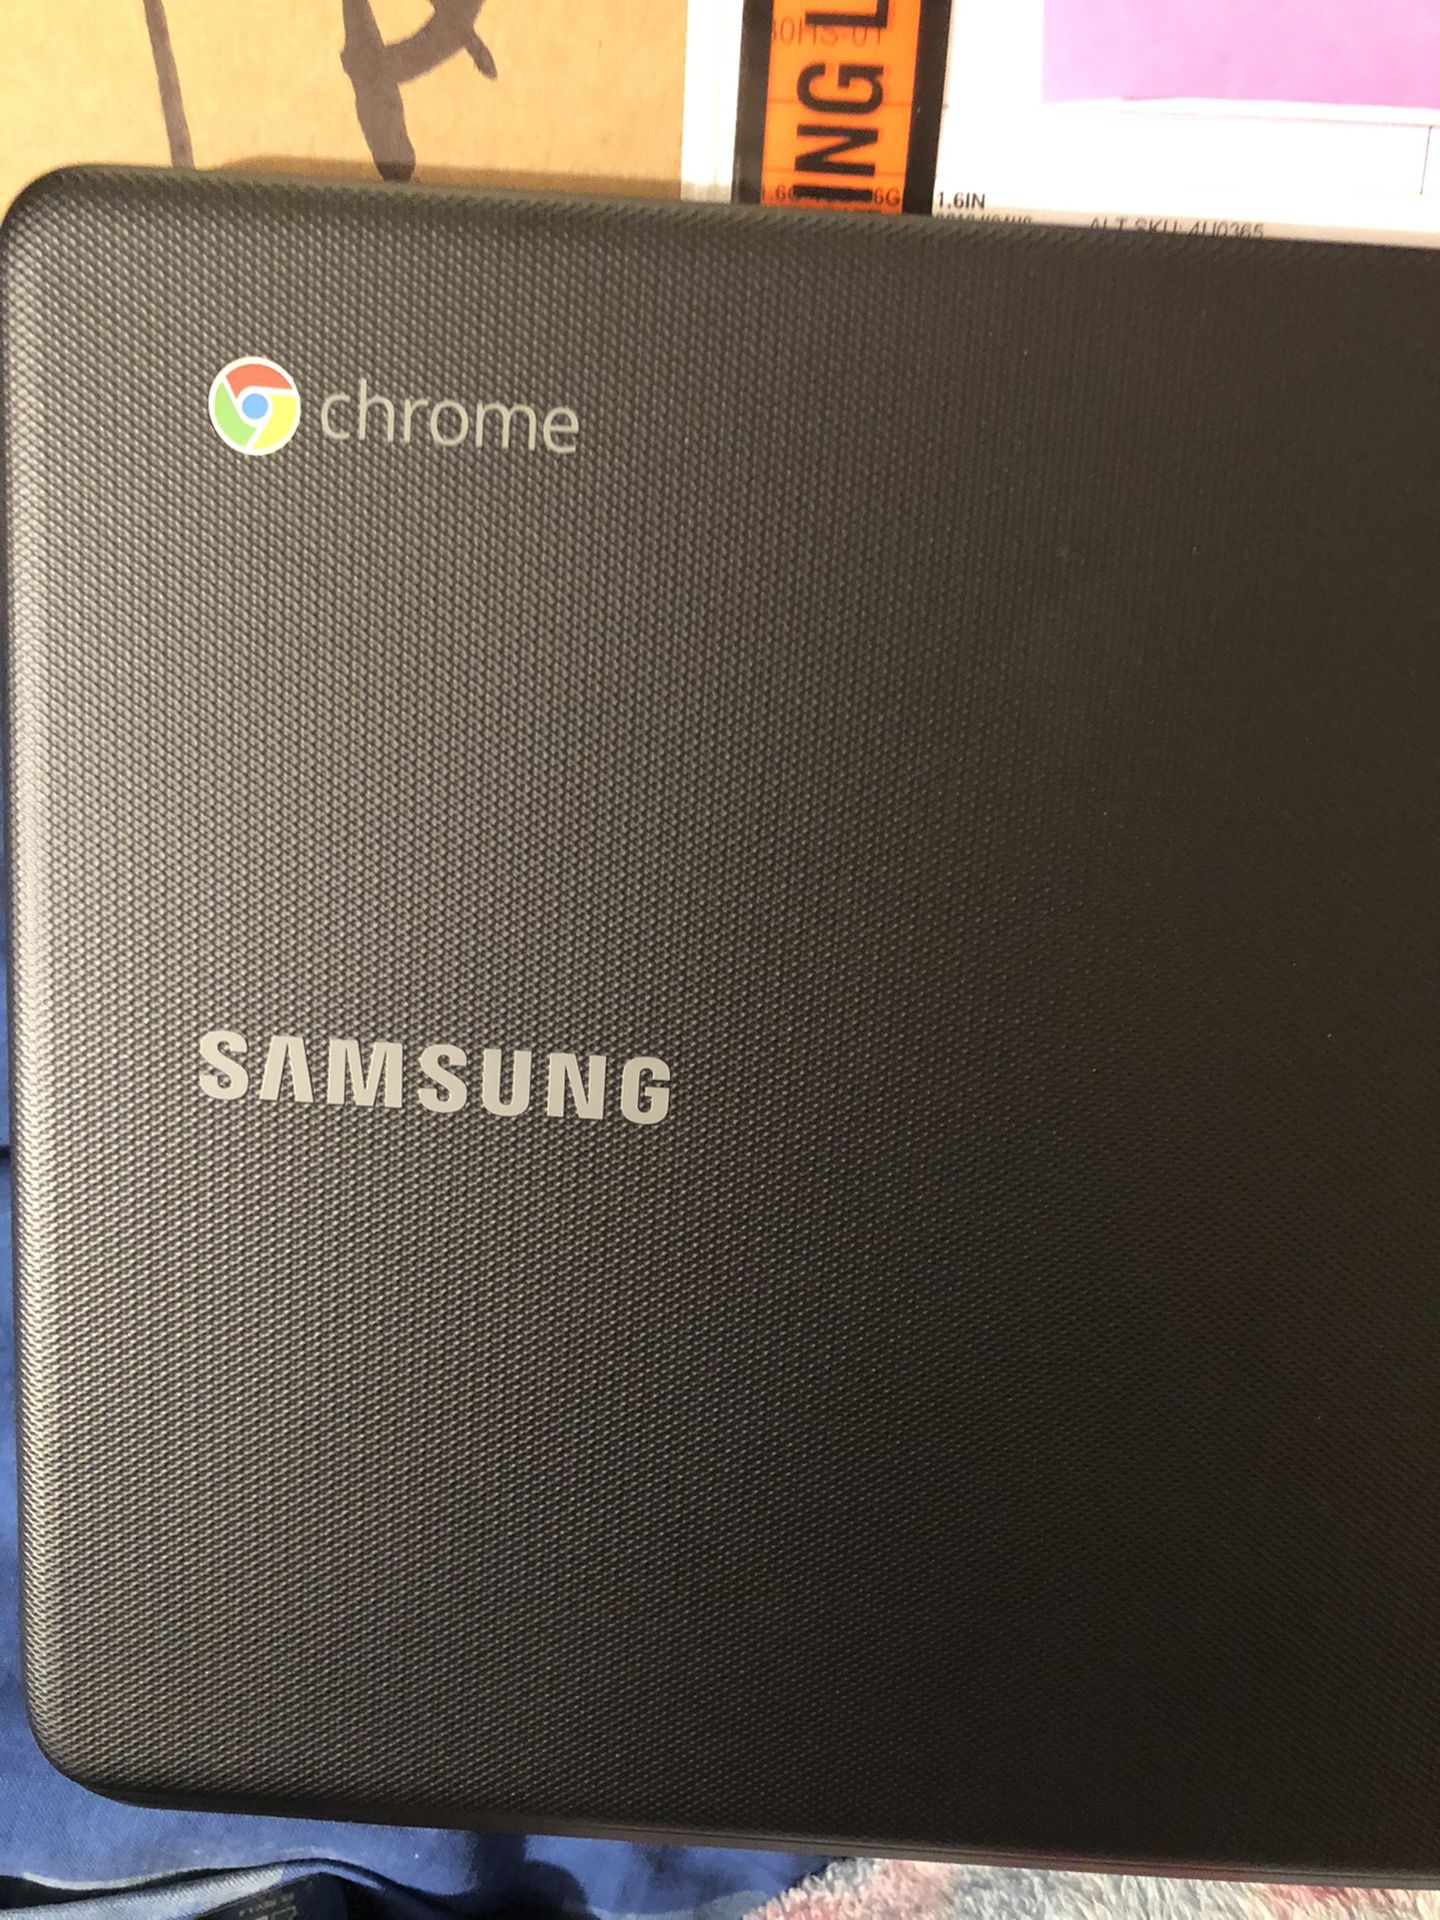 samsung laptop - chrome notebook - brand new in box